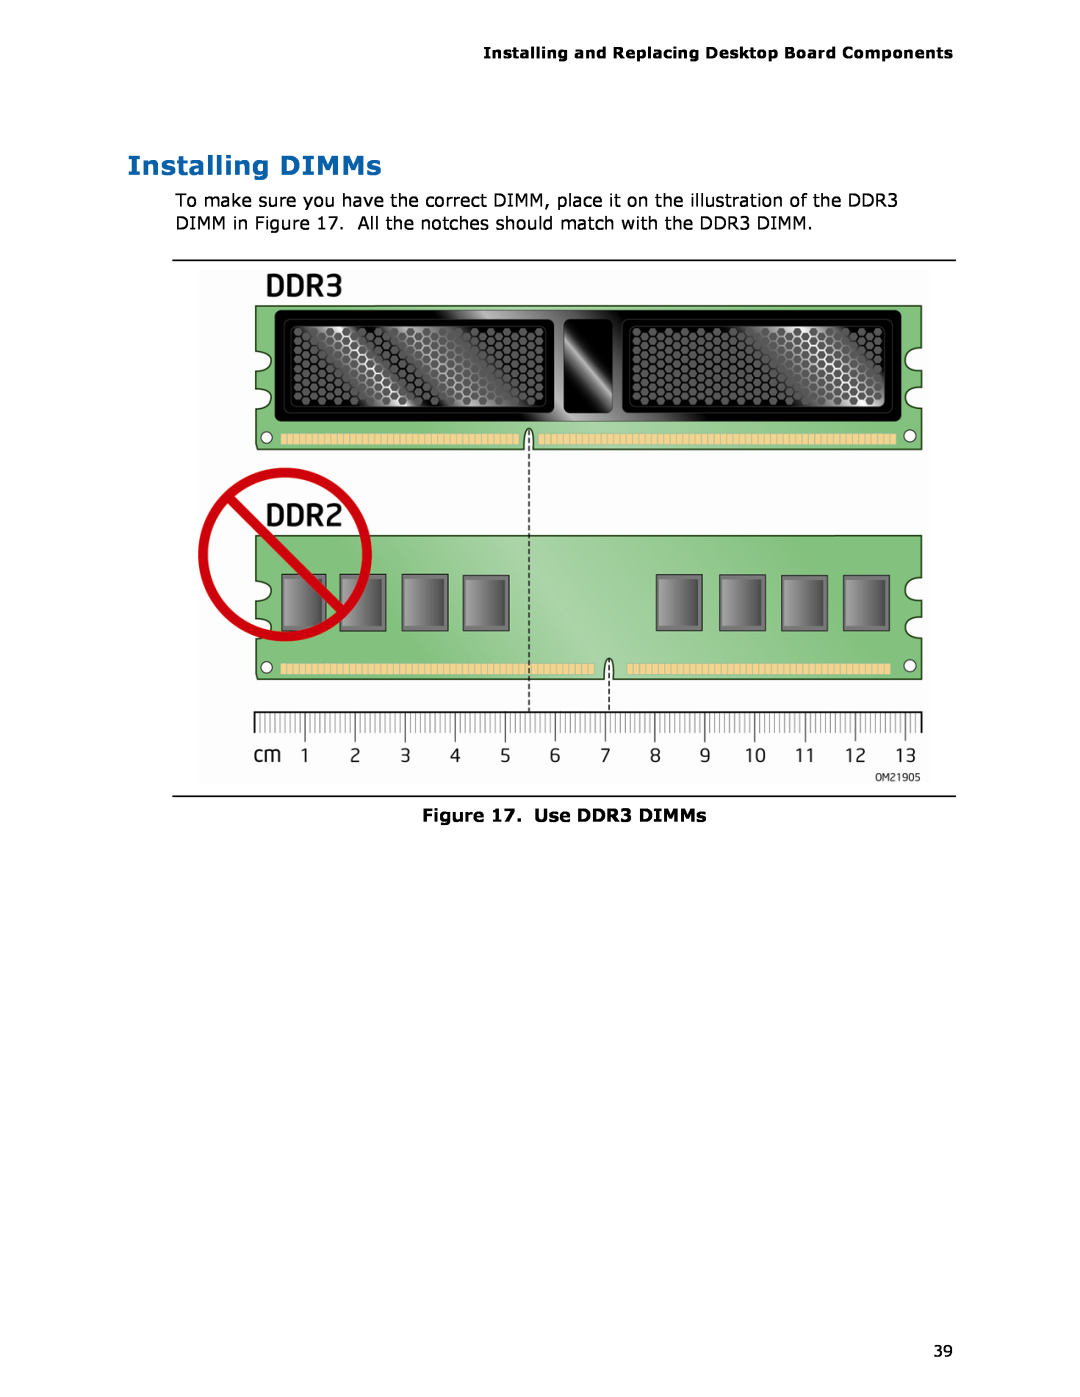 Intel BOXDH55HC manual Installing DIMMs, Use DDR3 DIMMs 